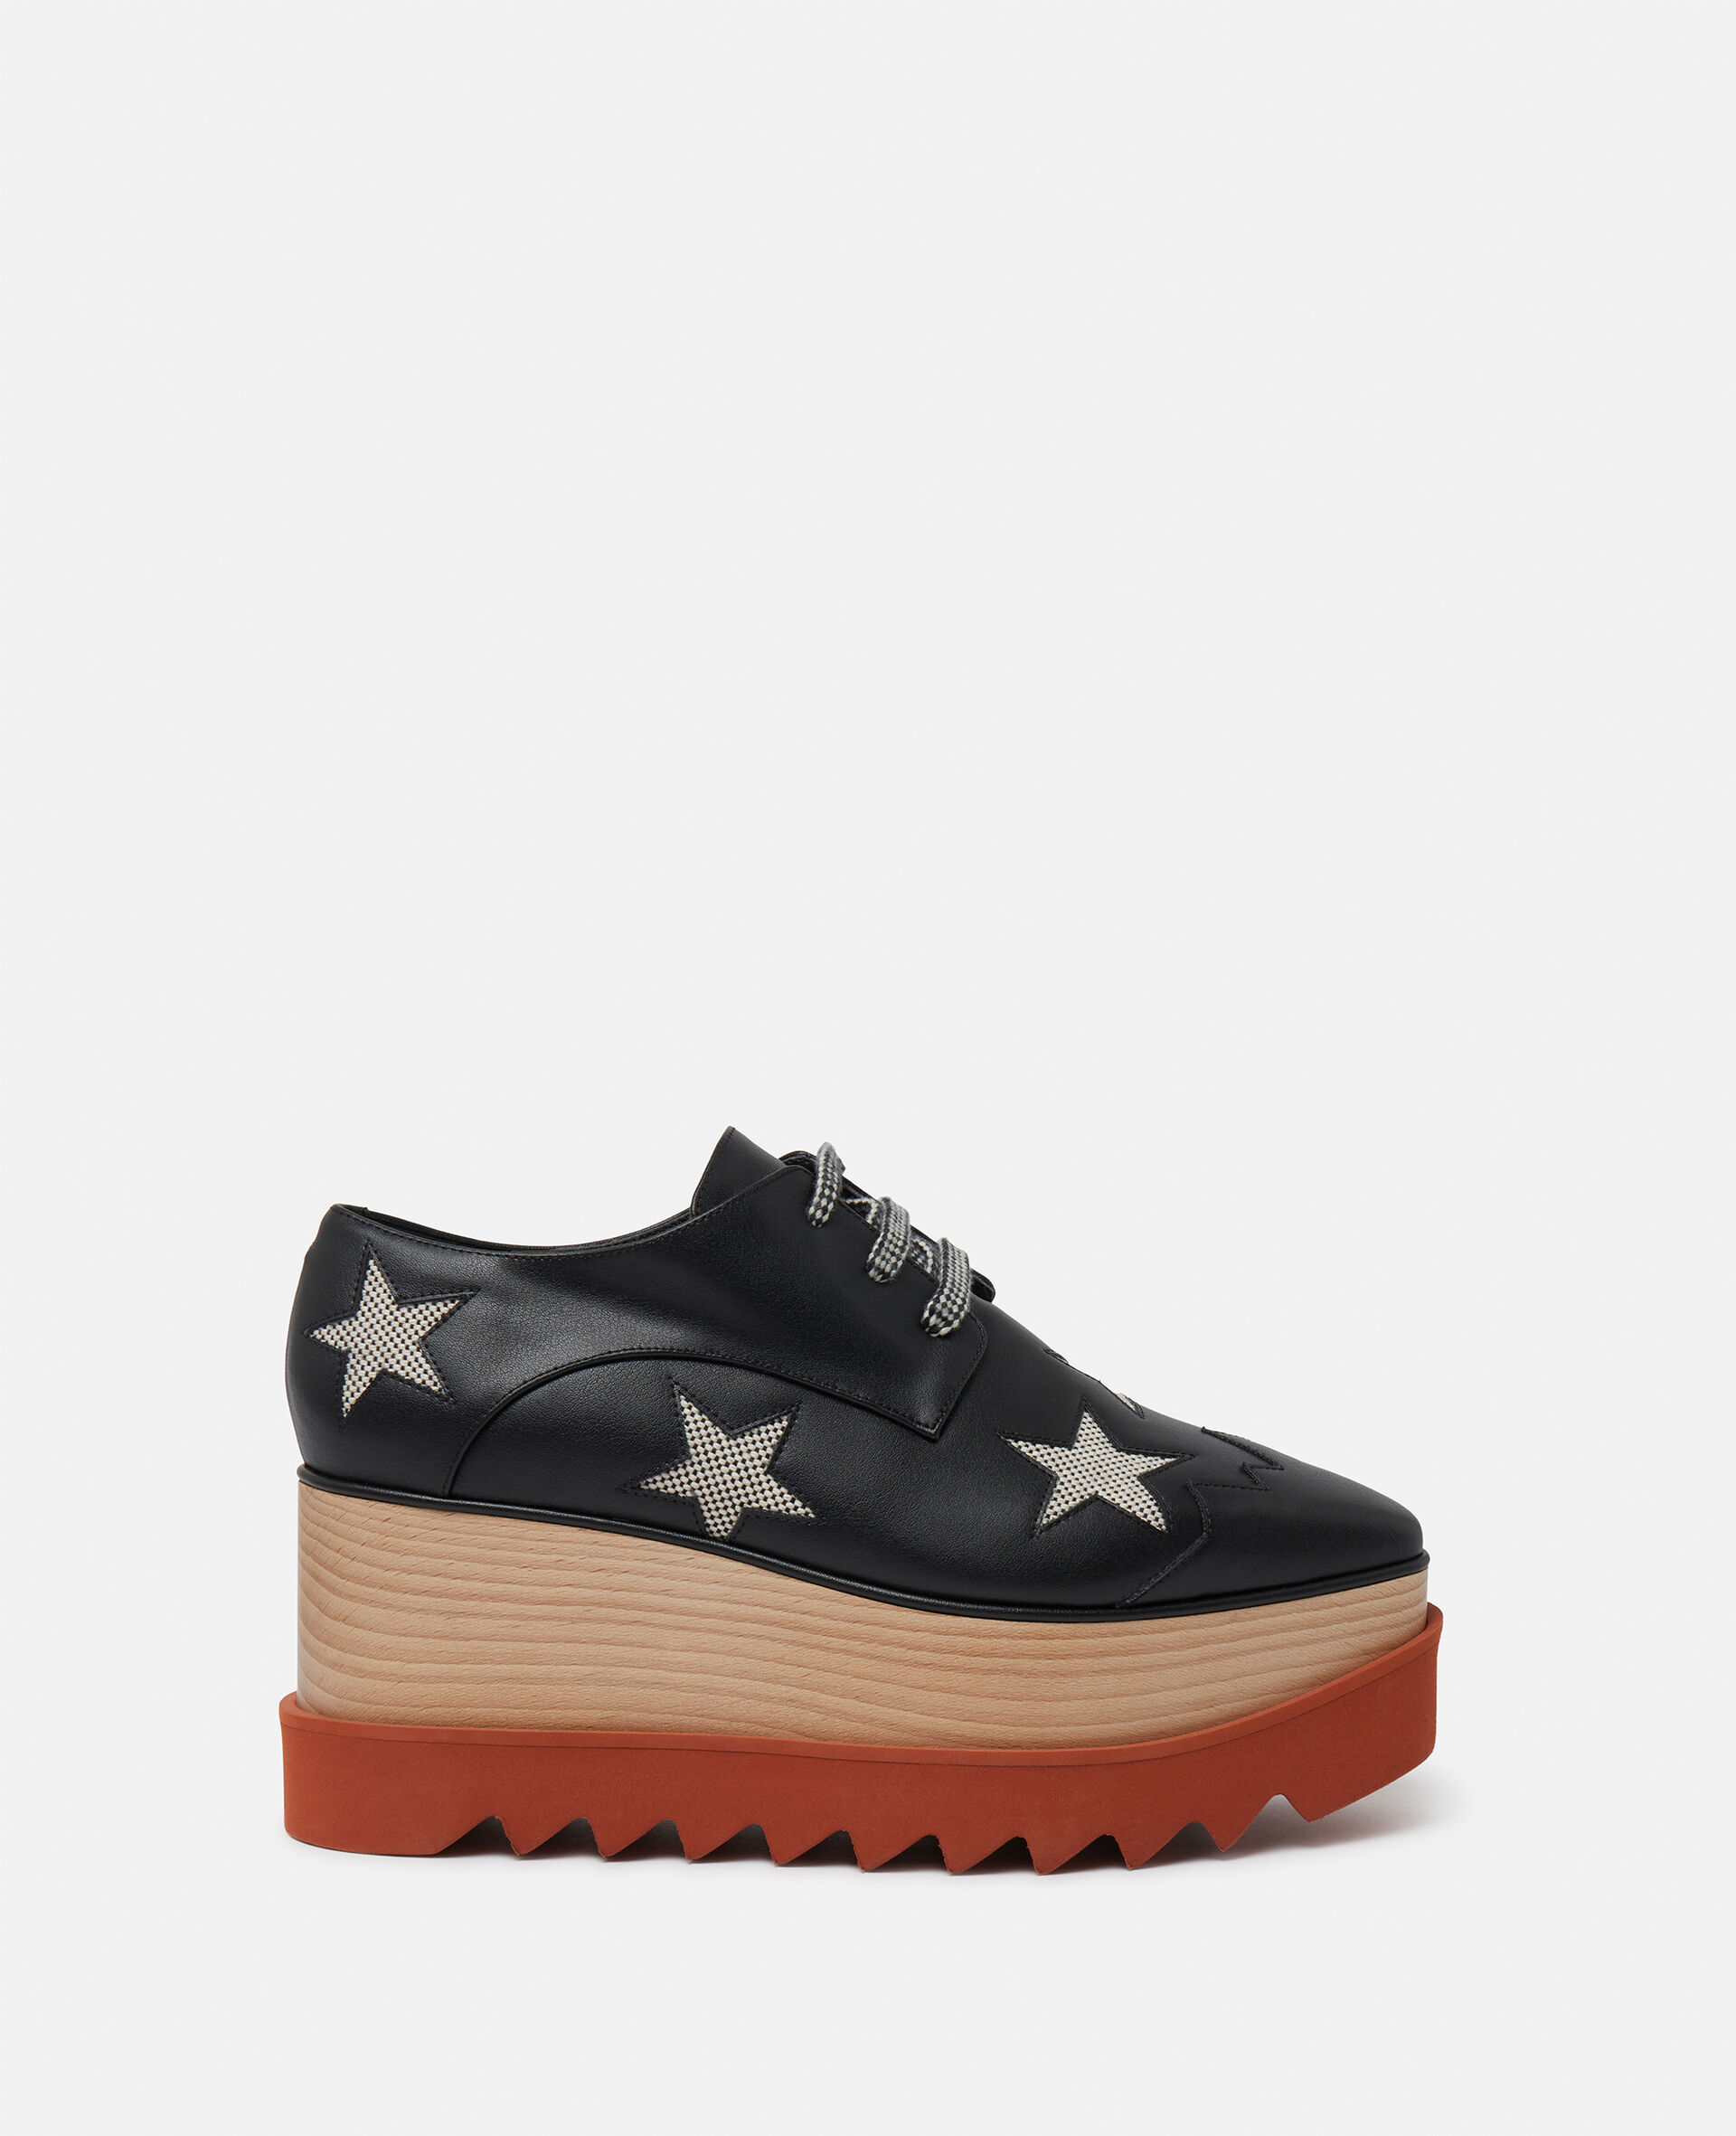 Elyse Stars Platform Shoes-Multicoloured-medium